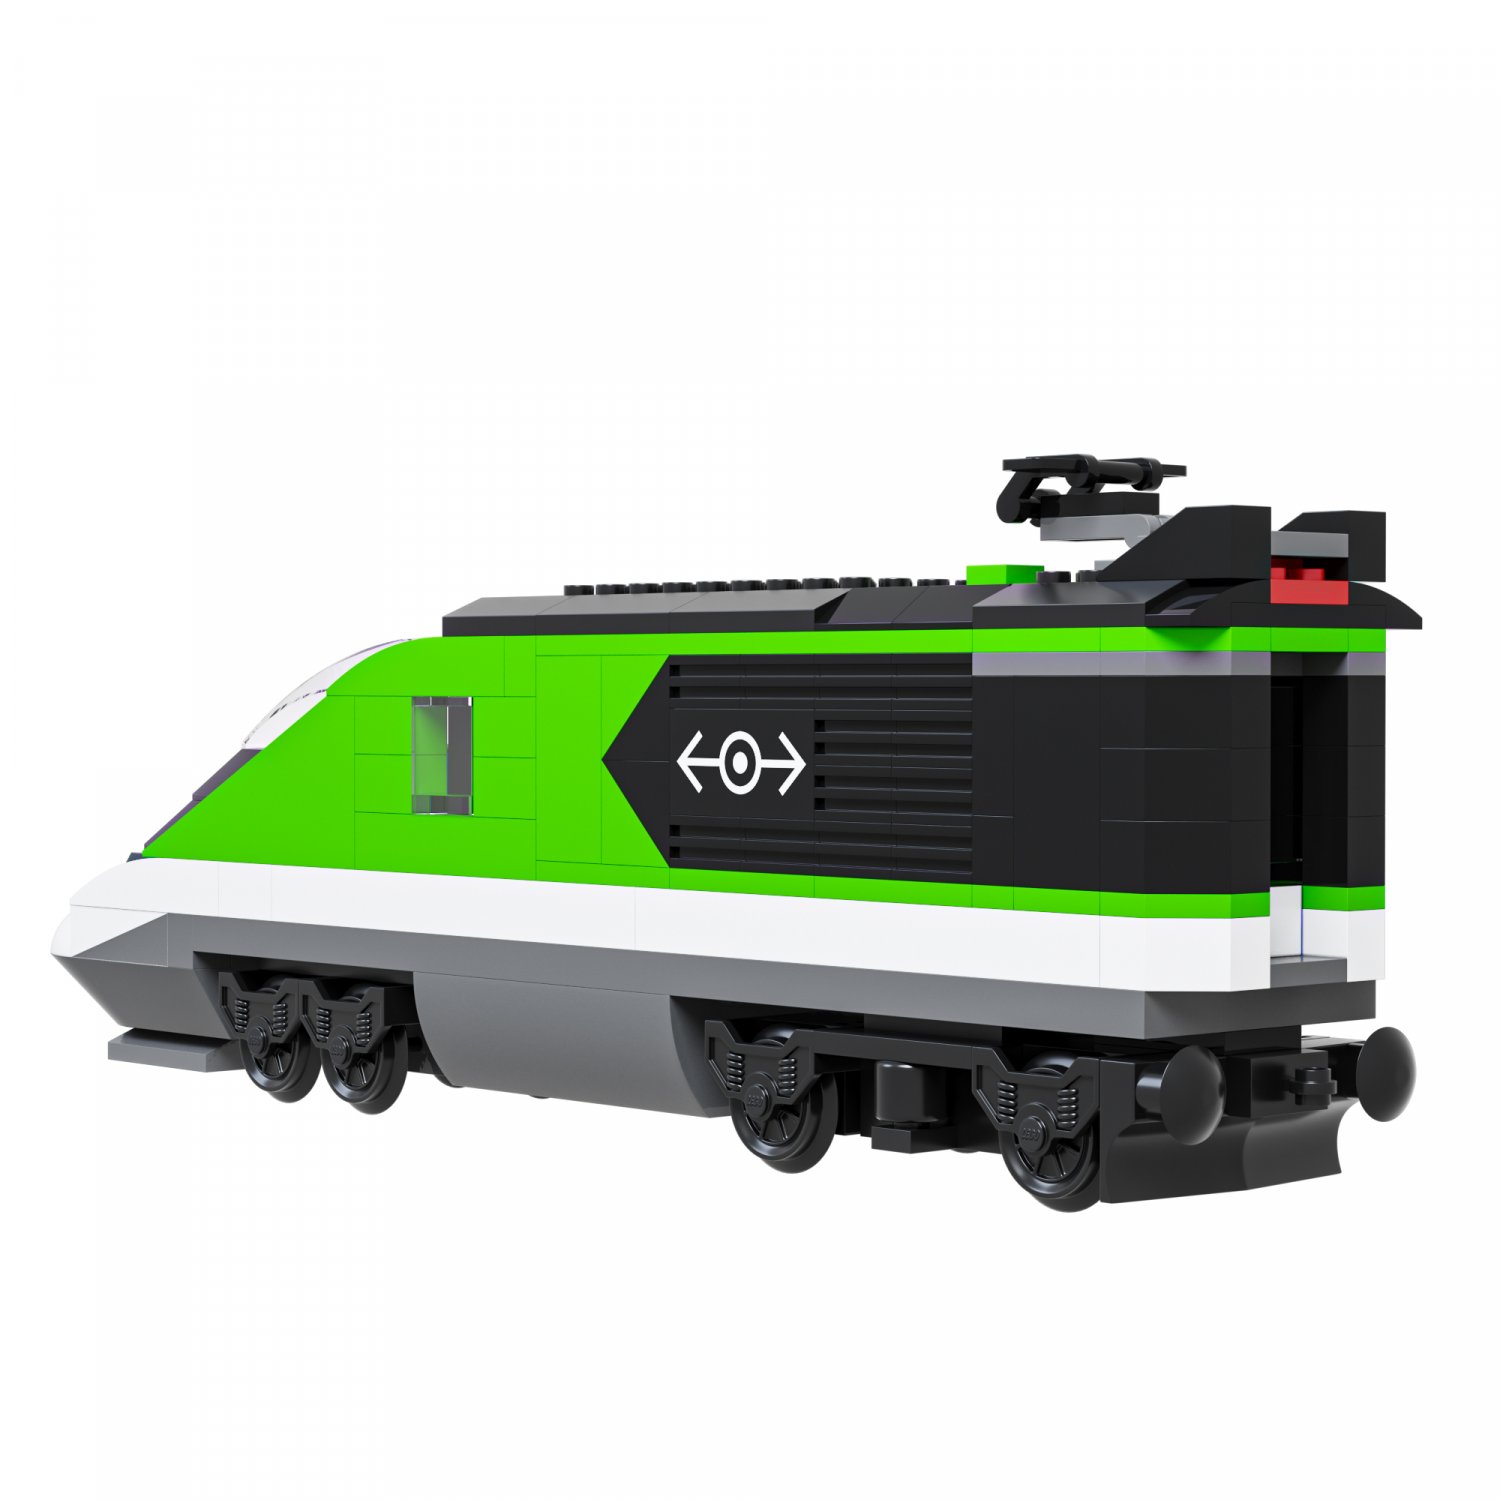 Lego Train City Cargo Freight Crane Wagon Trailer Railway from 60198 NEW 